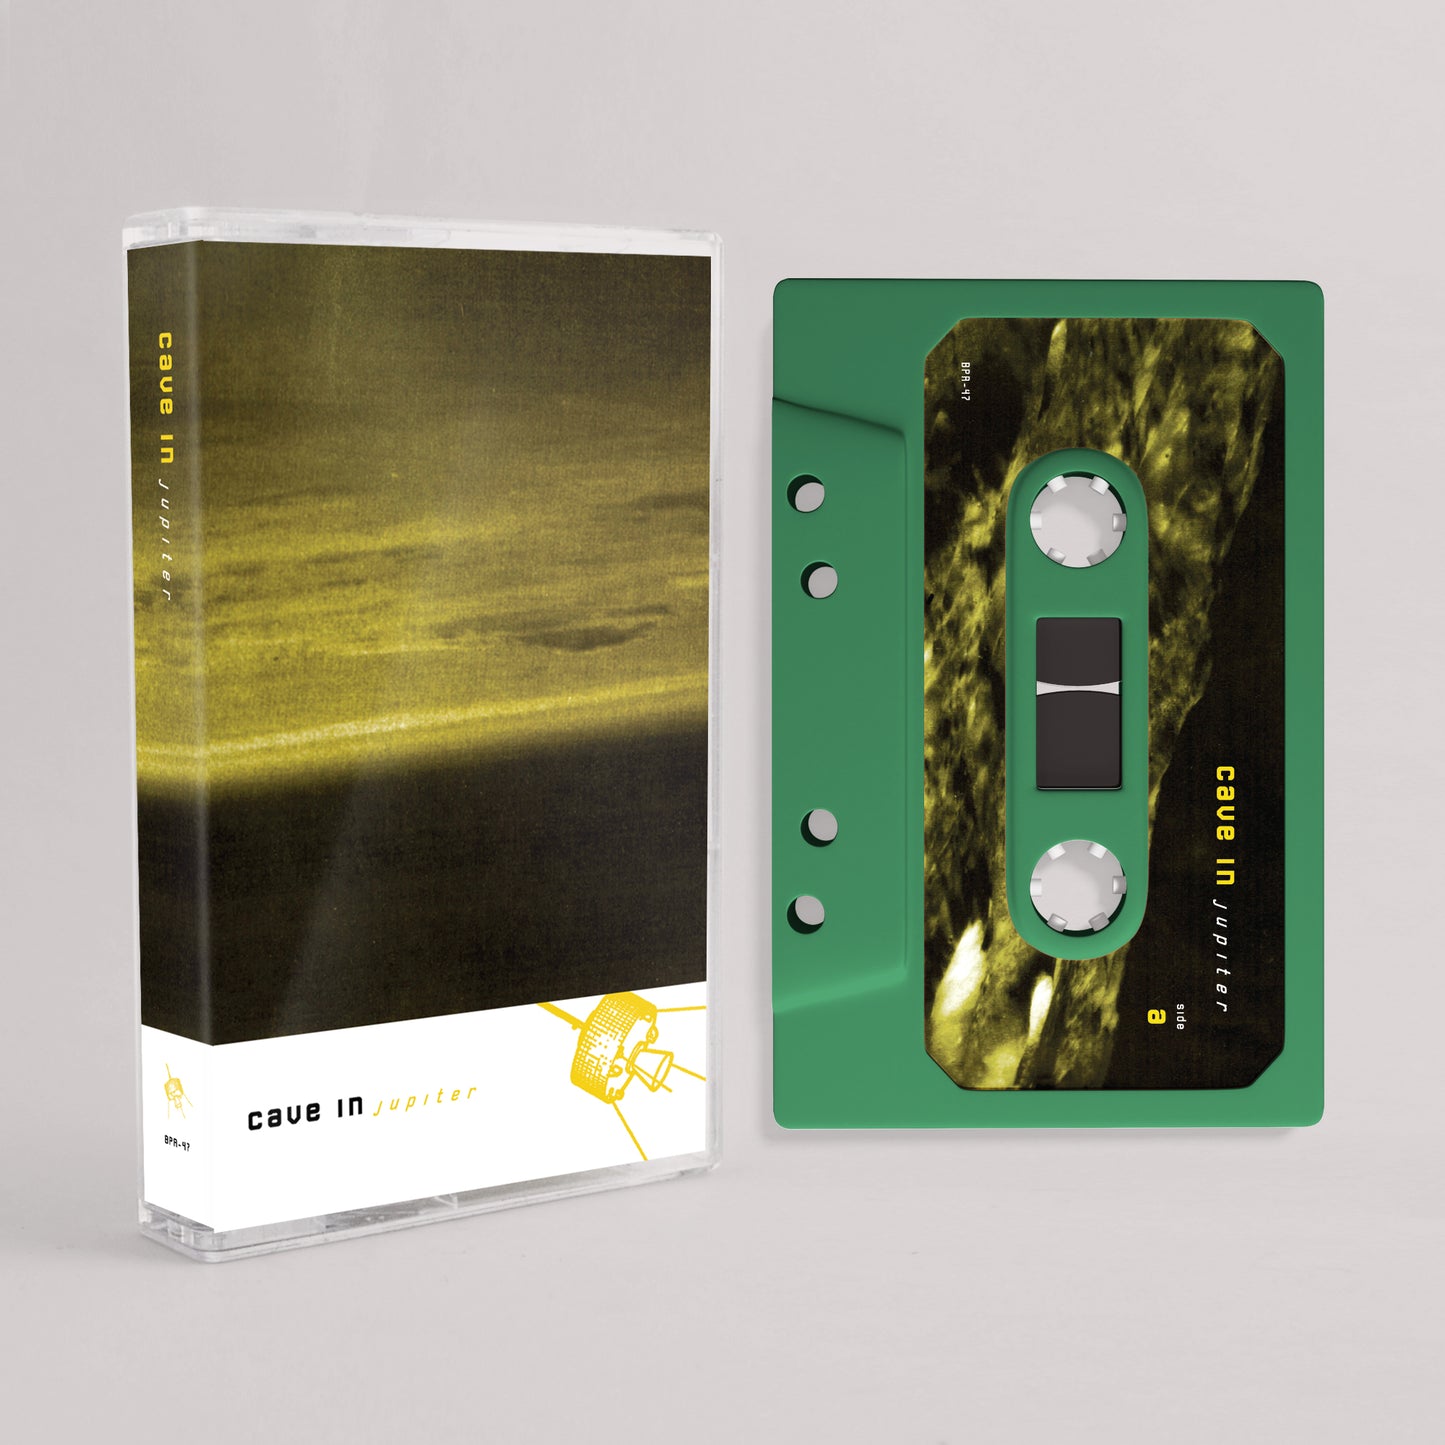 CAVE IN - Jupiter - Cassette Tape